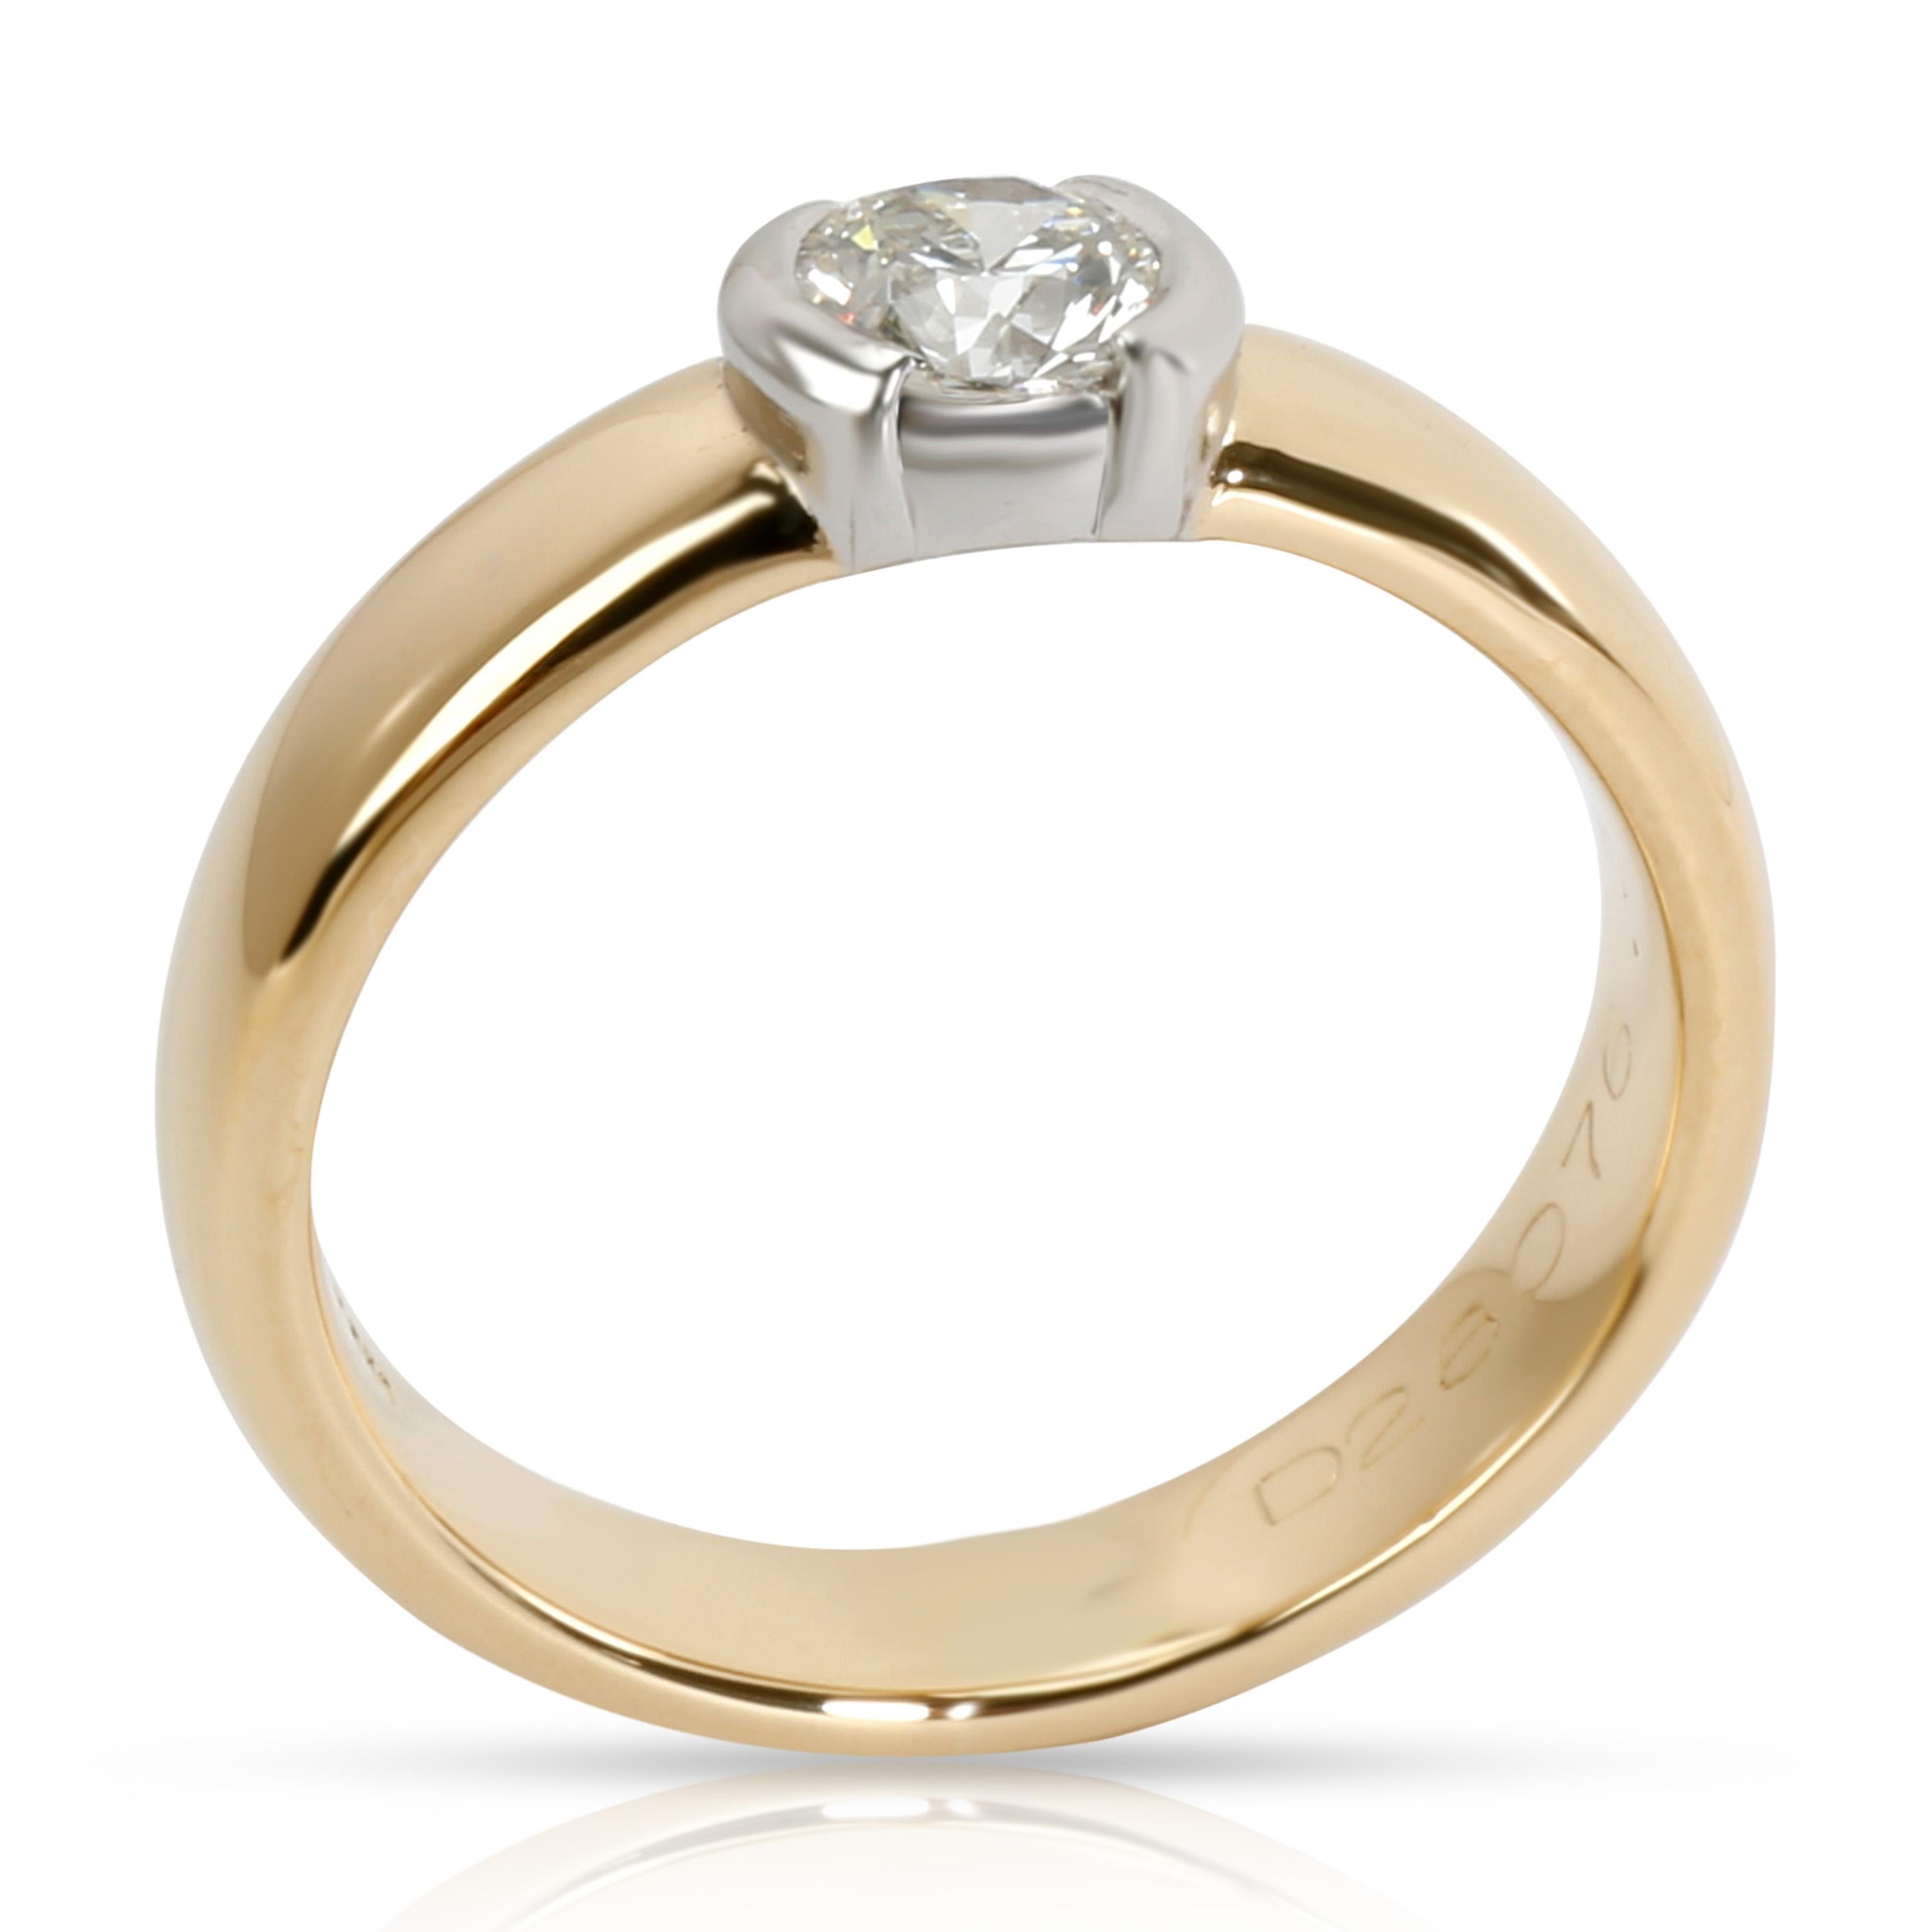 Round Cut Tiffany & Co. Semi Bezel Diamond Ring in 18 Karat 2-Tone Gold 0.35 Carat